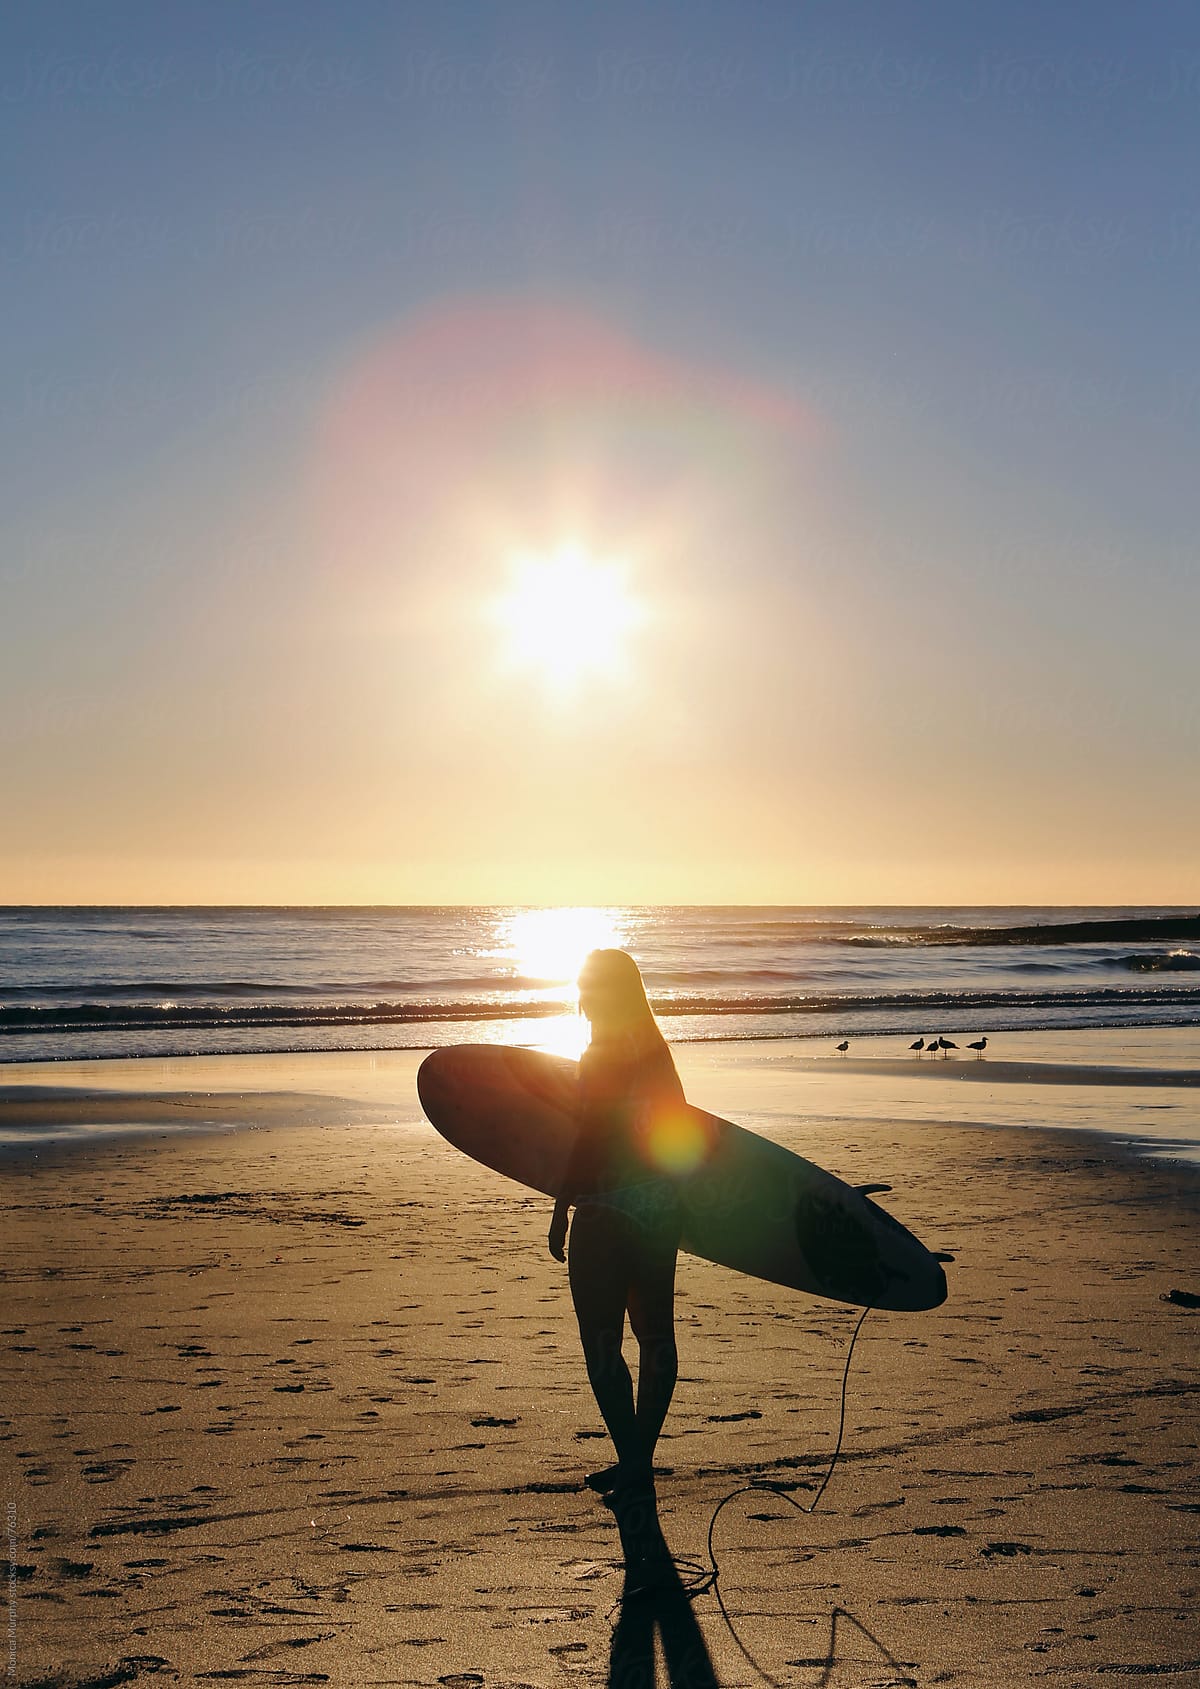 Girl In Bikini Walking Beach With Surfboard On Her Head Sun Flare Behind Del Colaborador De 